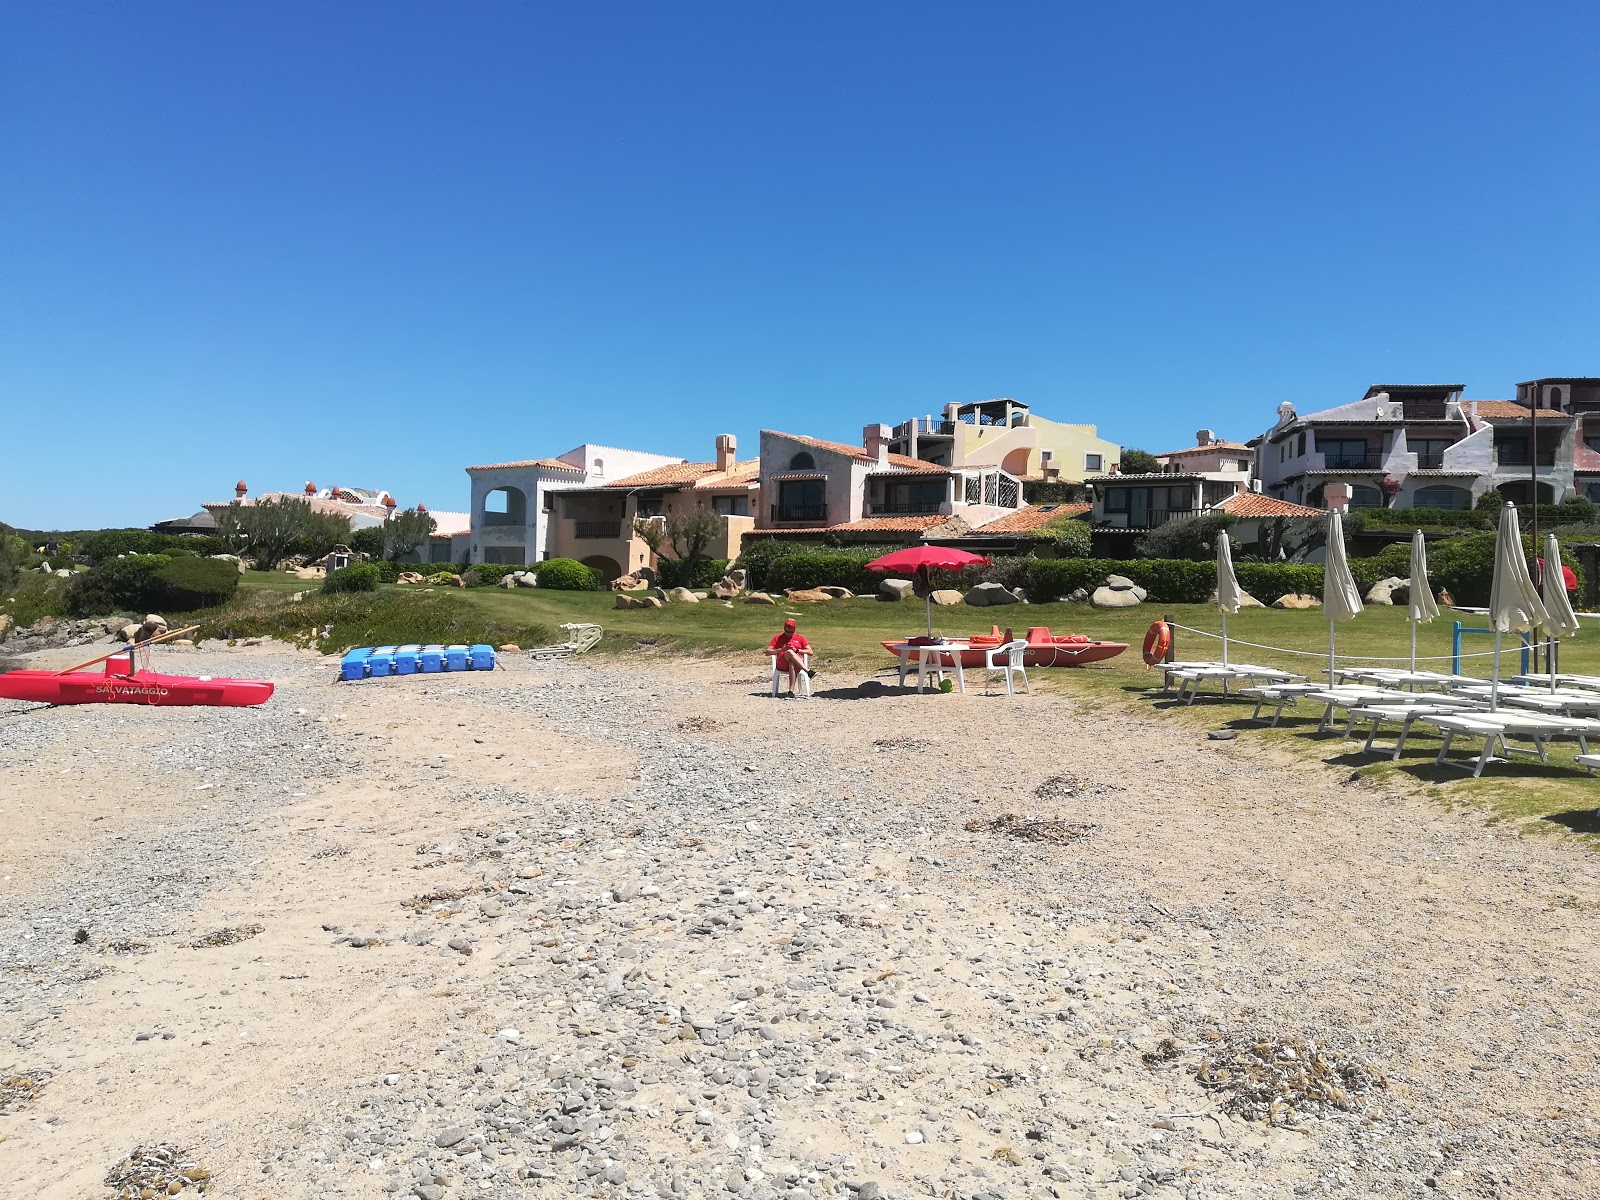 Fotografie cu Spiaggia Cala del Faro cu nivelul de curățenie in medie